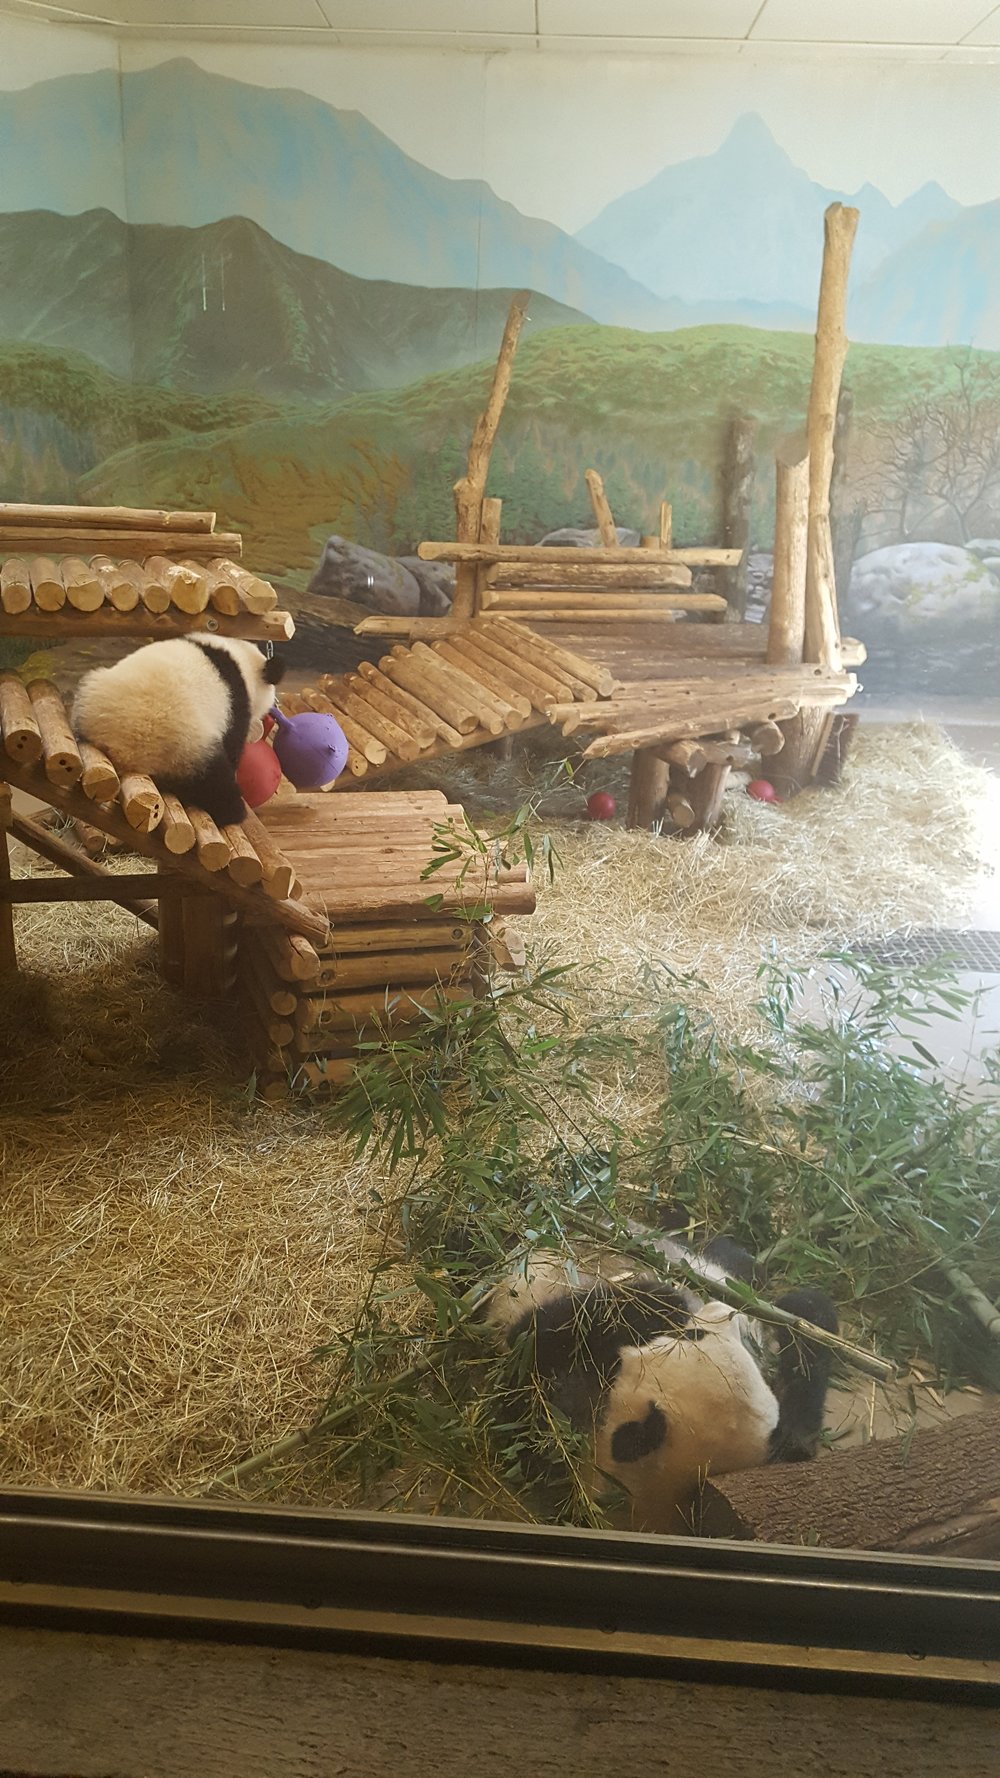  Toronto Zoo 